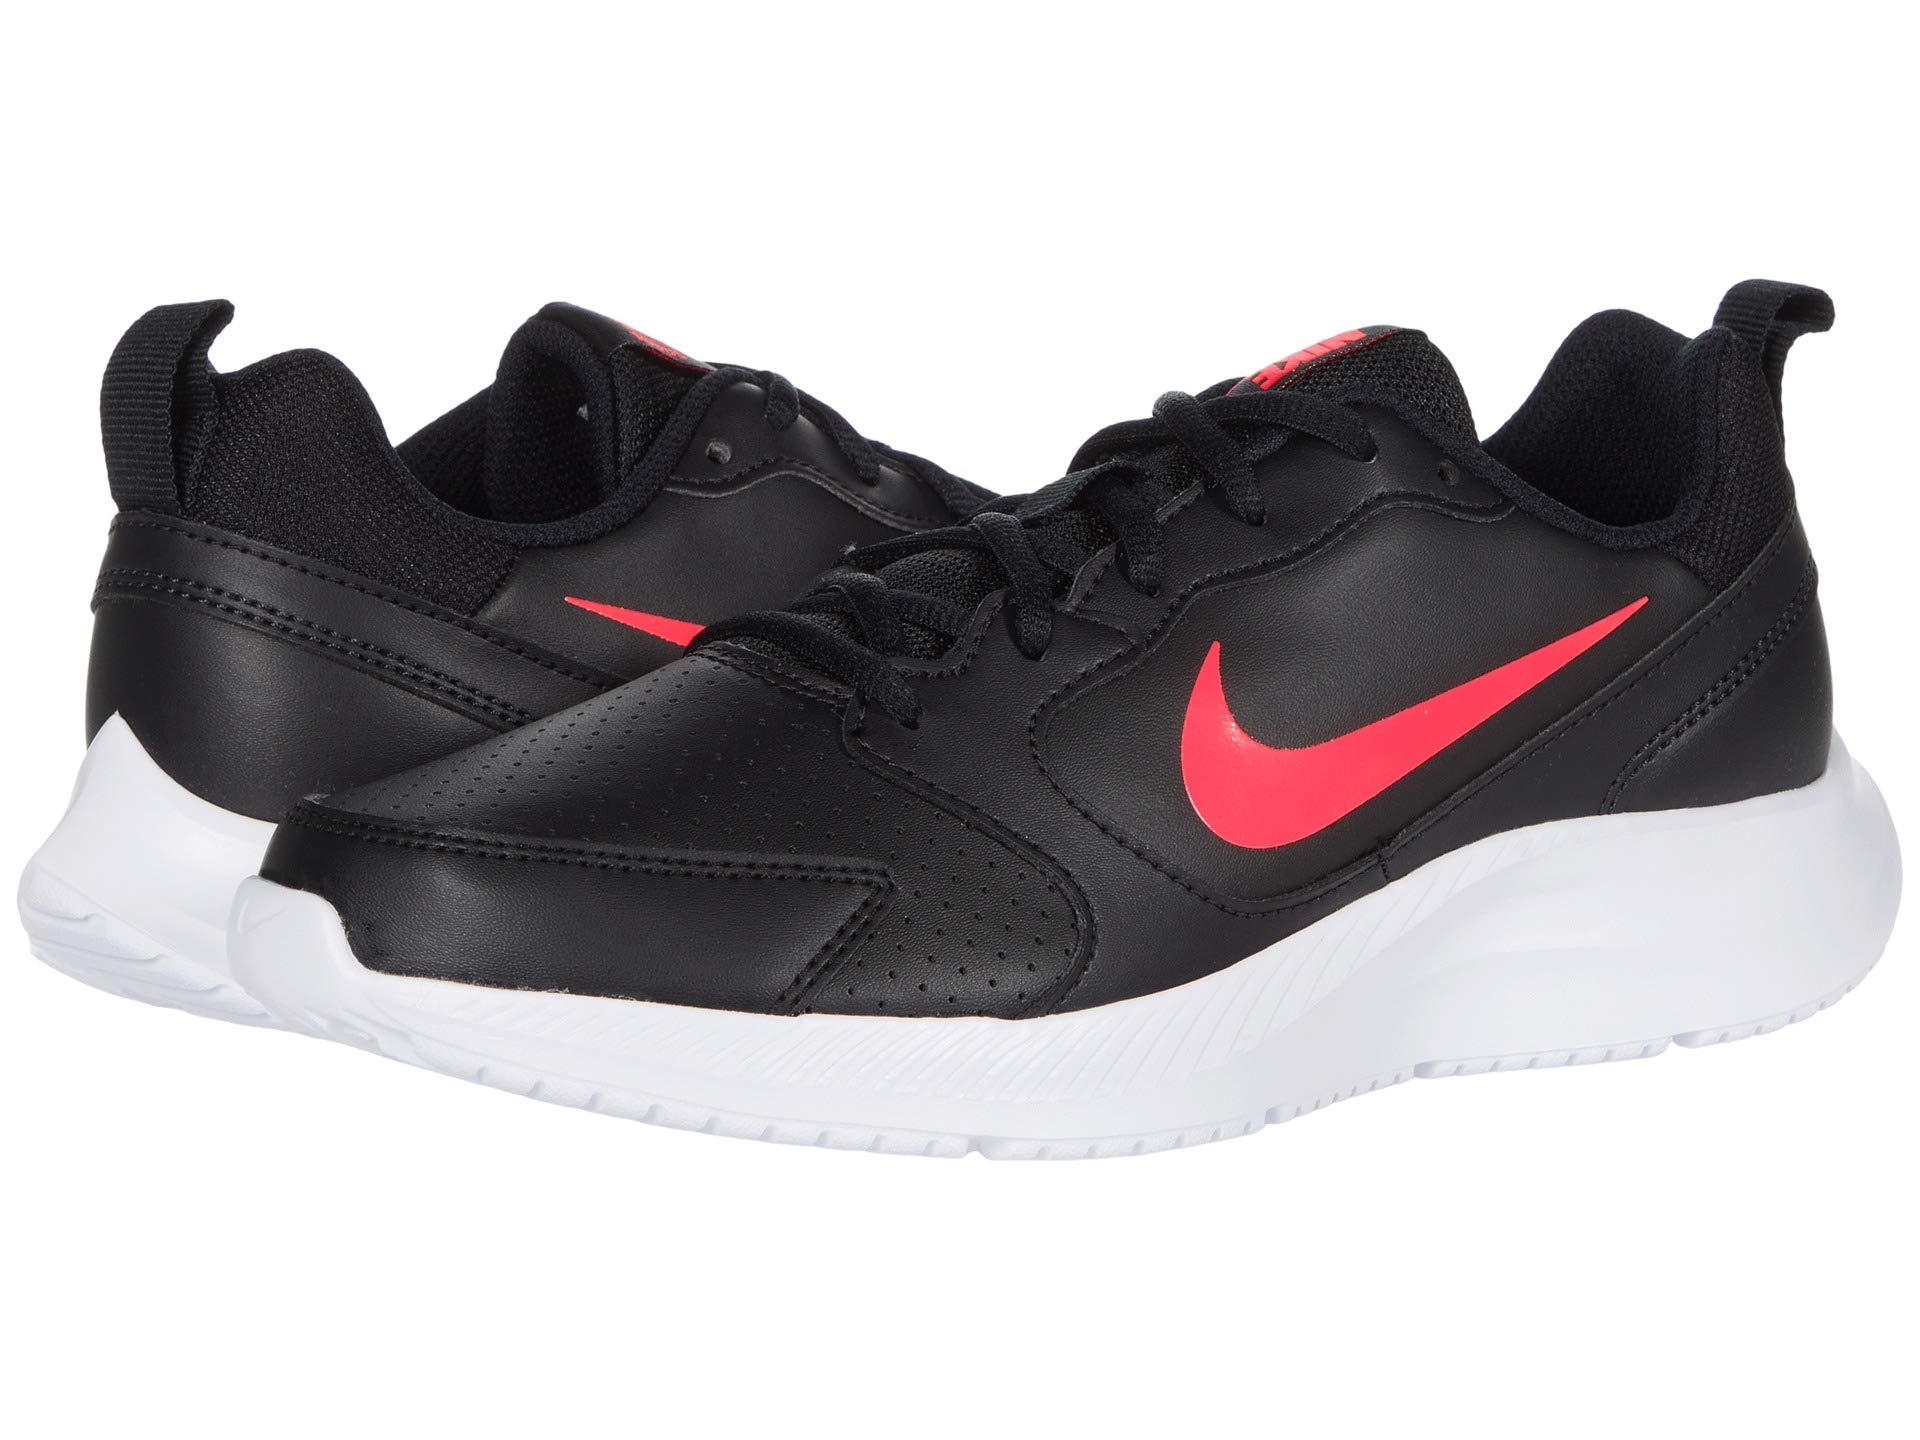 Nike Leather Todos Rn Shoe in Black/Black-Black-Anthracite (Black) - Lyst